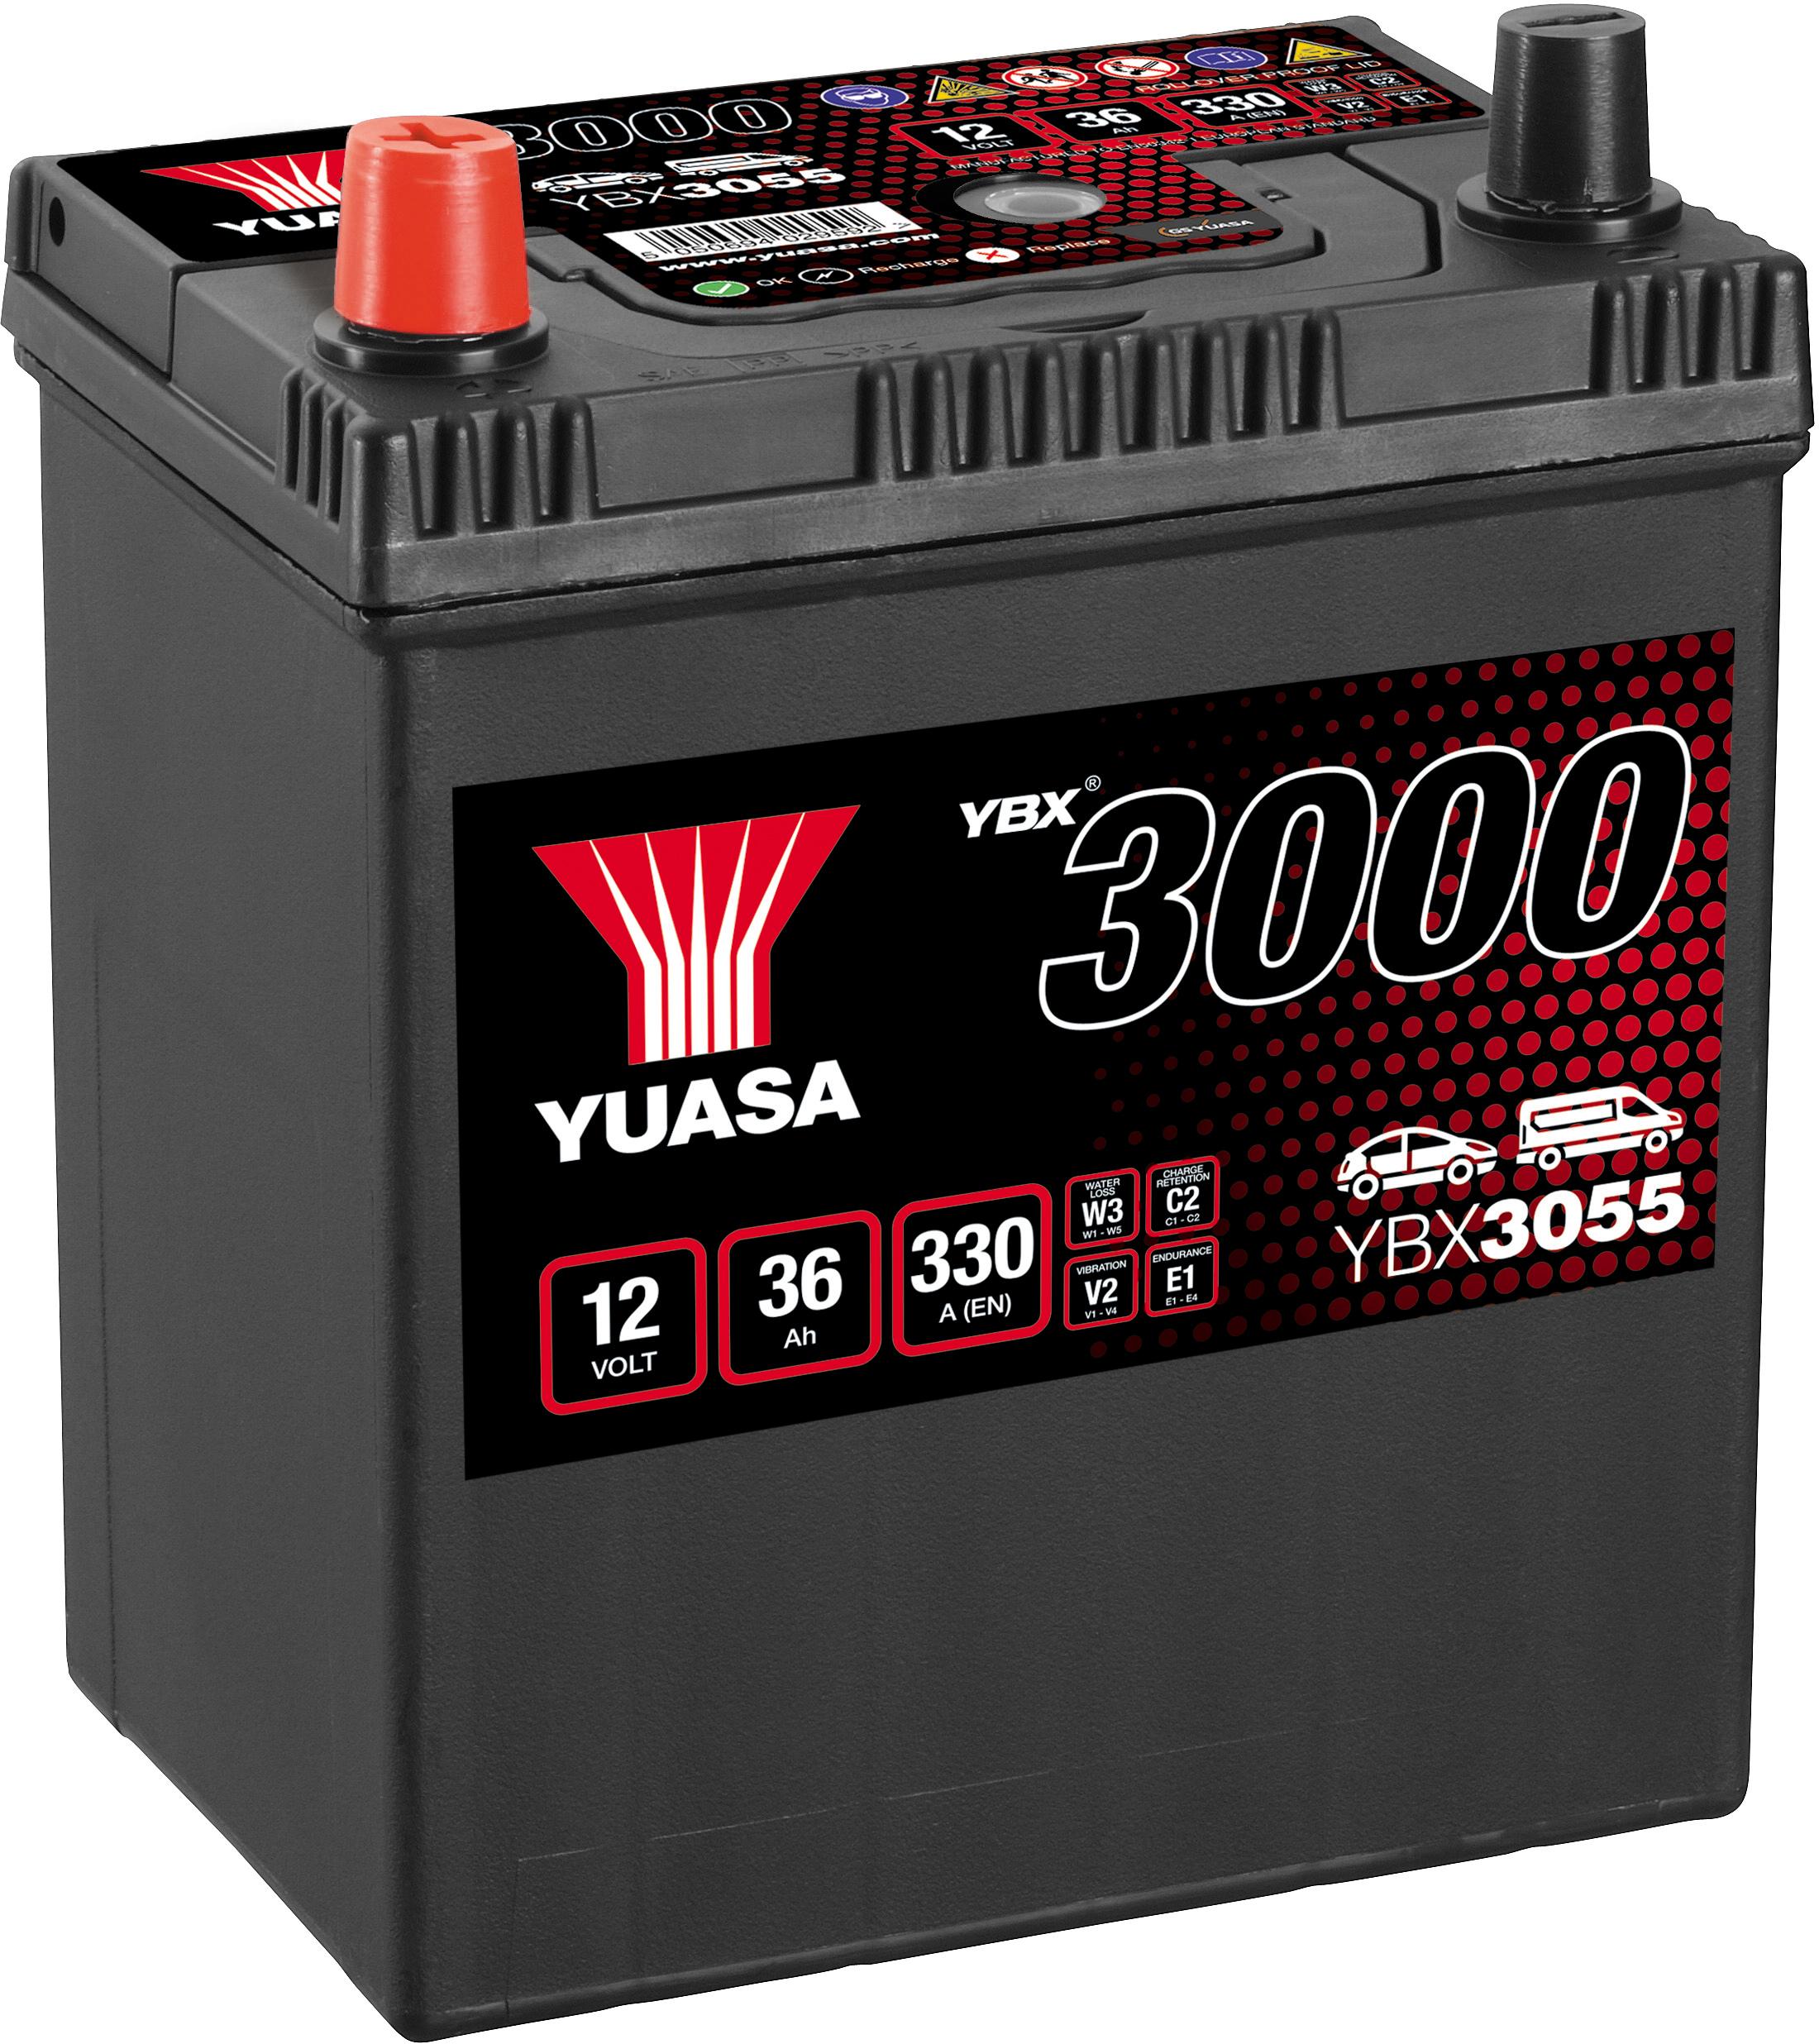 Ybx3055 12V 36Ah 330A Yuasa Smf Battery